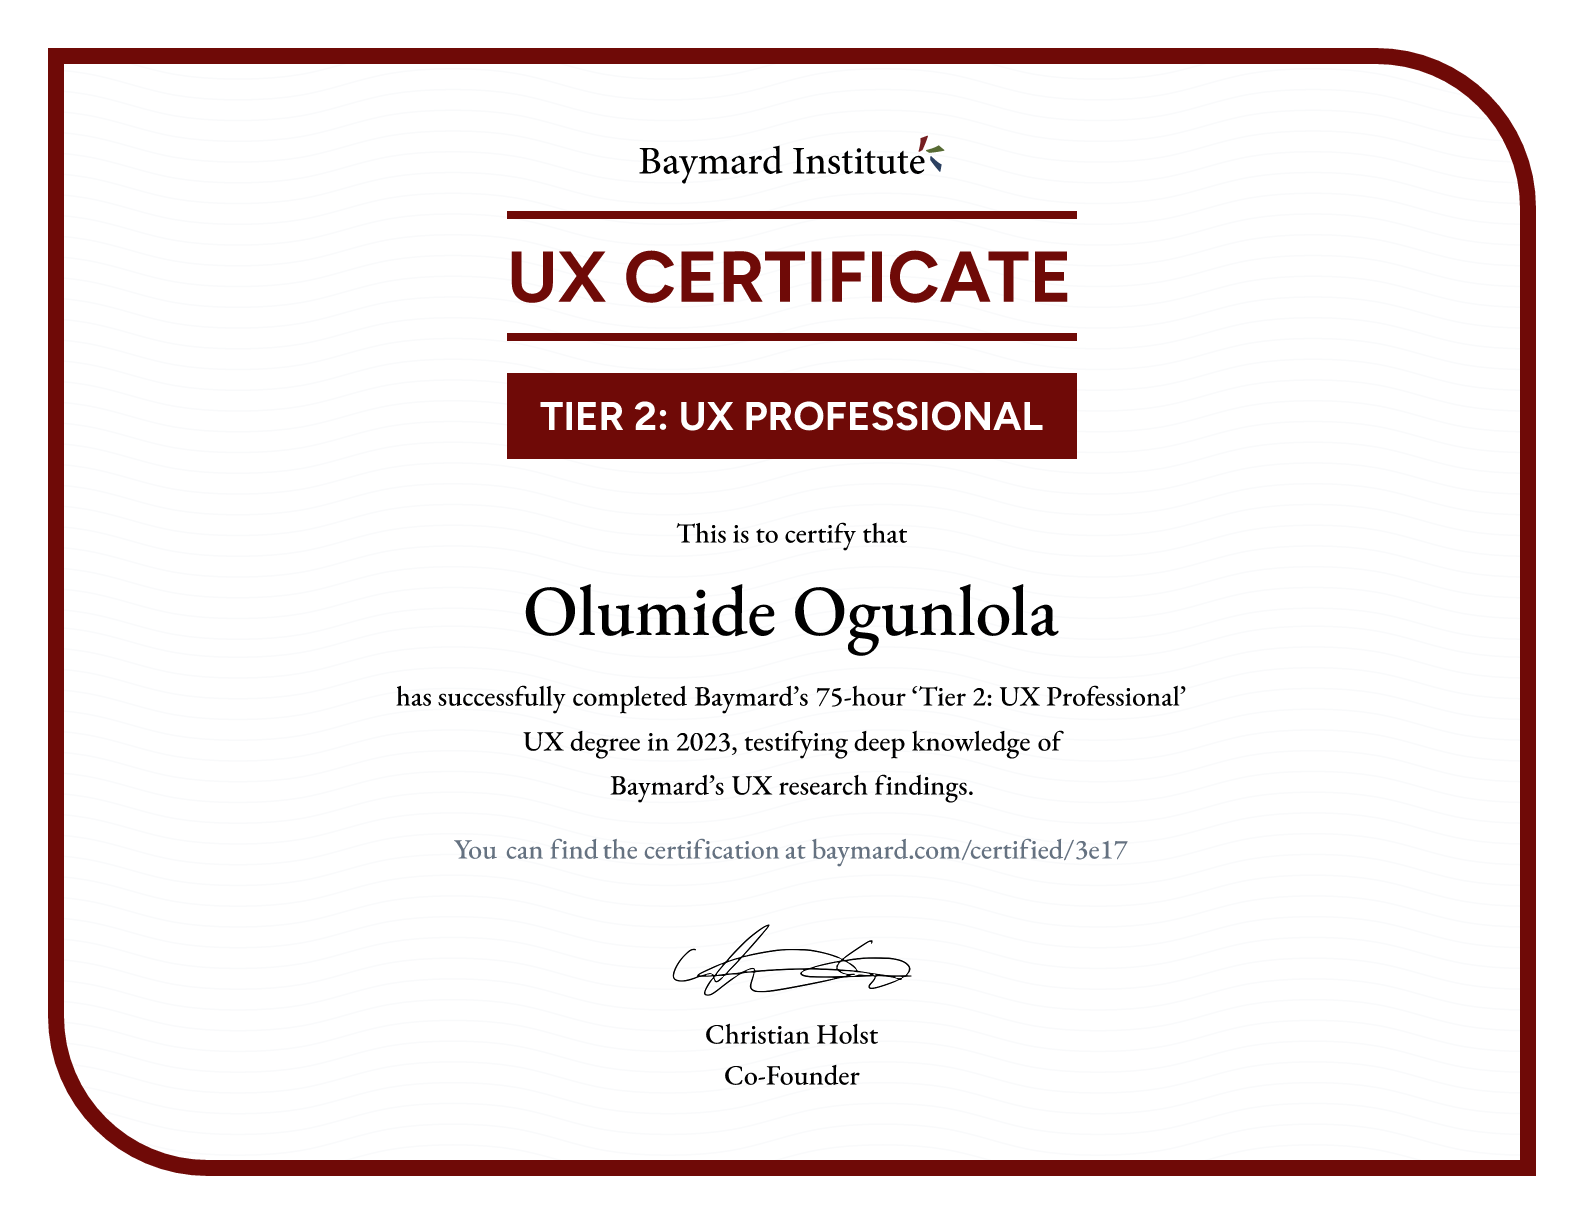 Olumide Ogunlola’s certificate